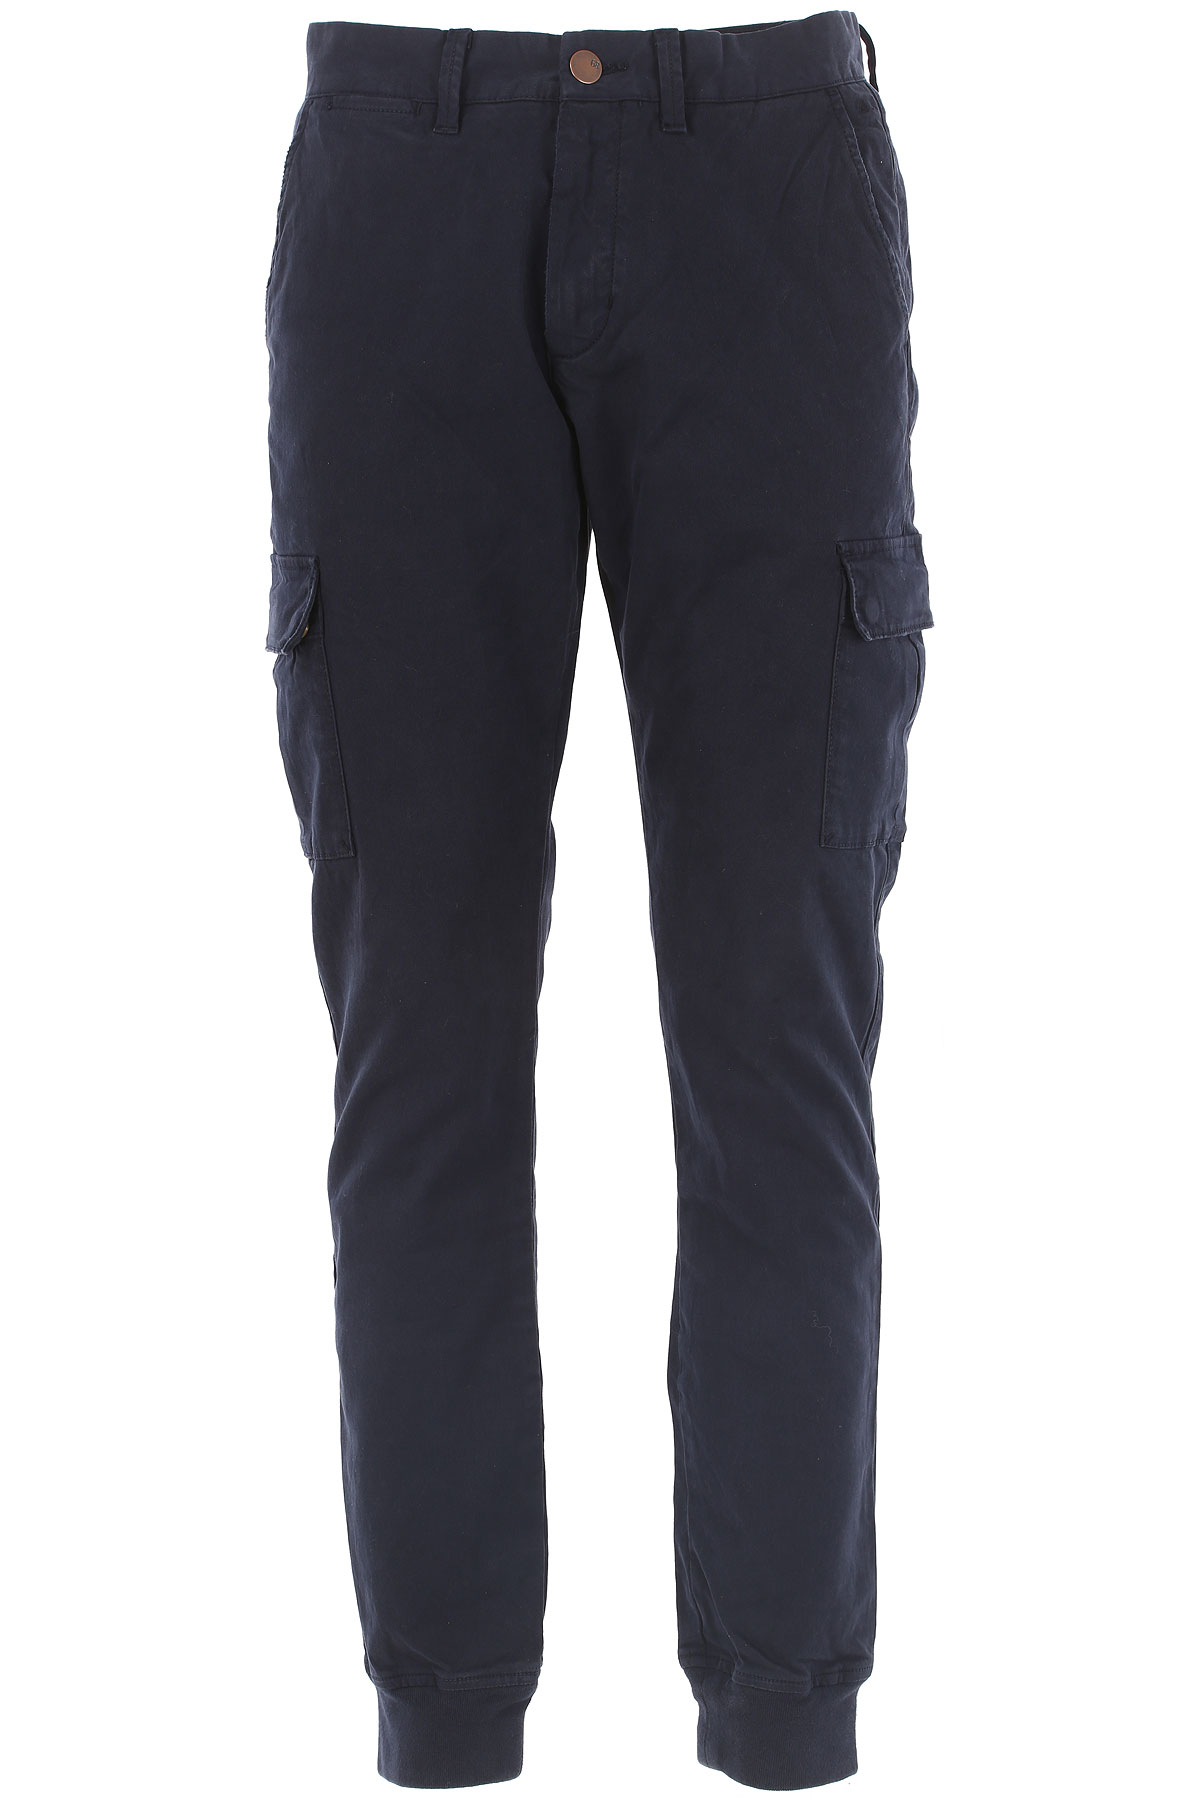 Sun68 Pantalon Homme Outlet, Military Cuff, Bleu marine, Coton, 2017, 48 49